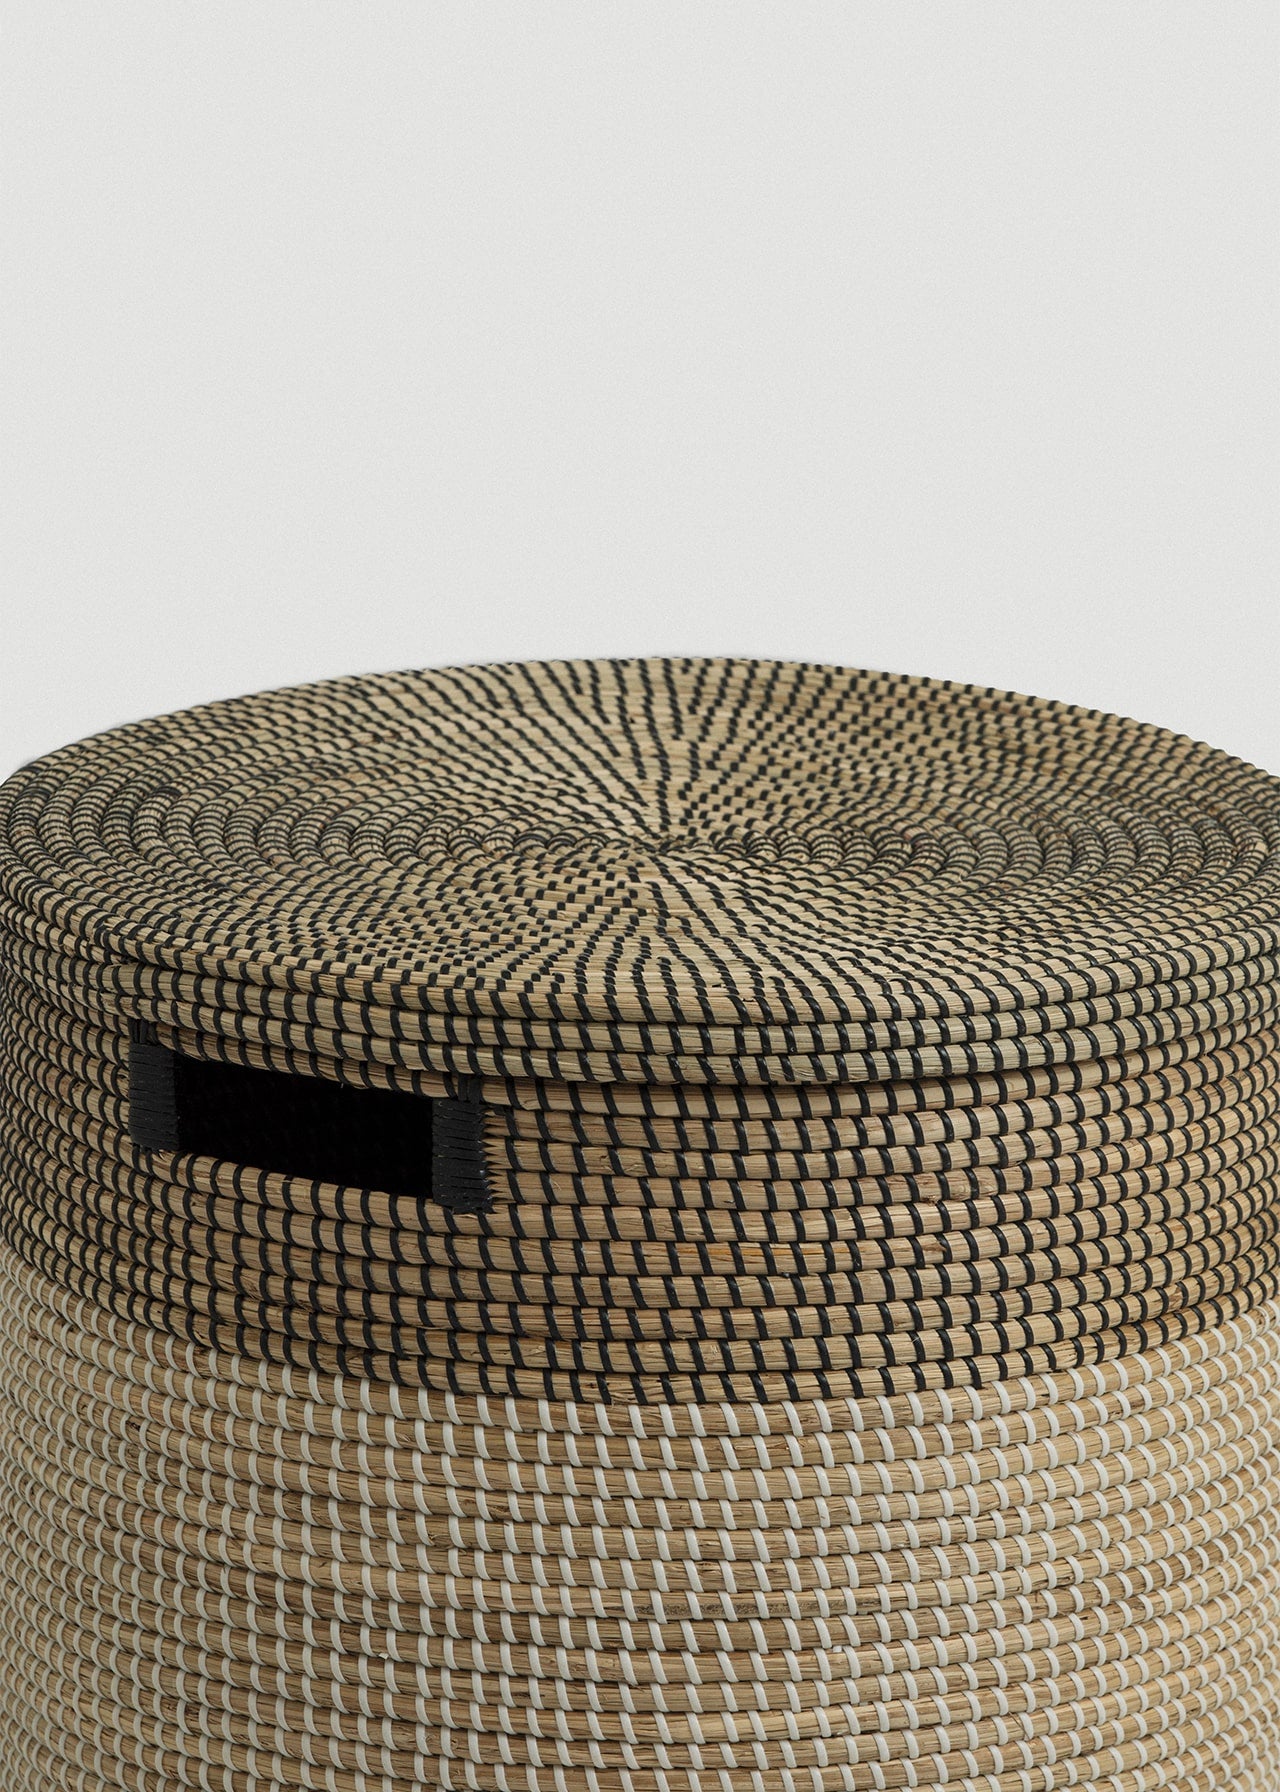 Black Medina Flat Lid Seagrass Basket - Black Medina Flat Lid Seagrass Basket